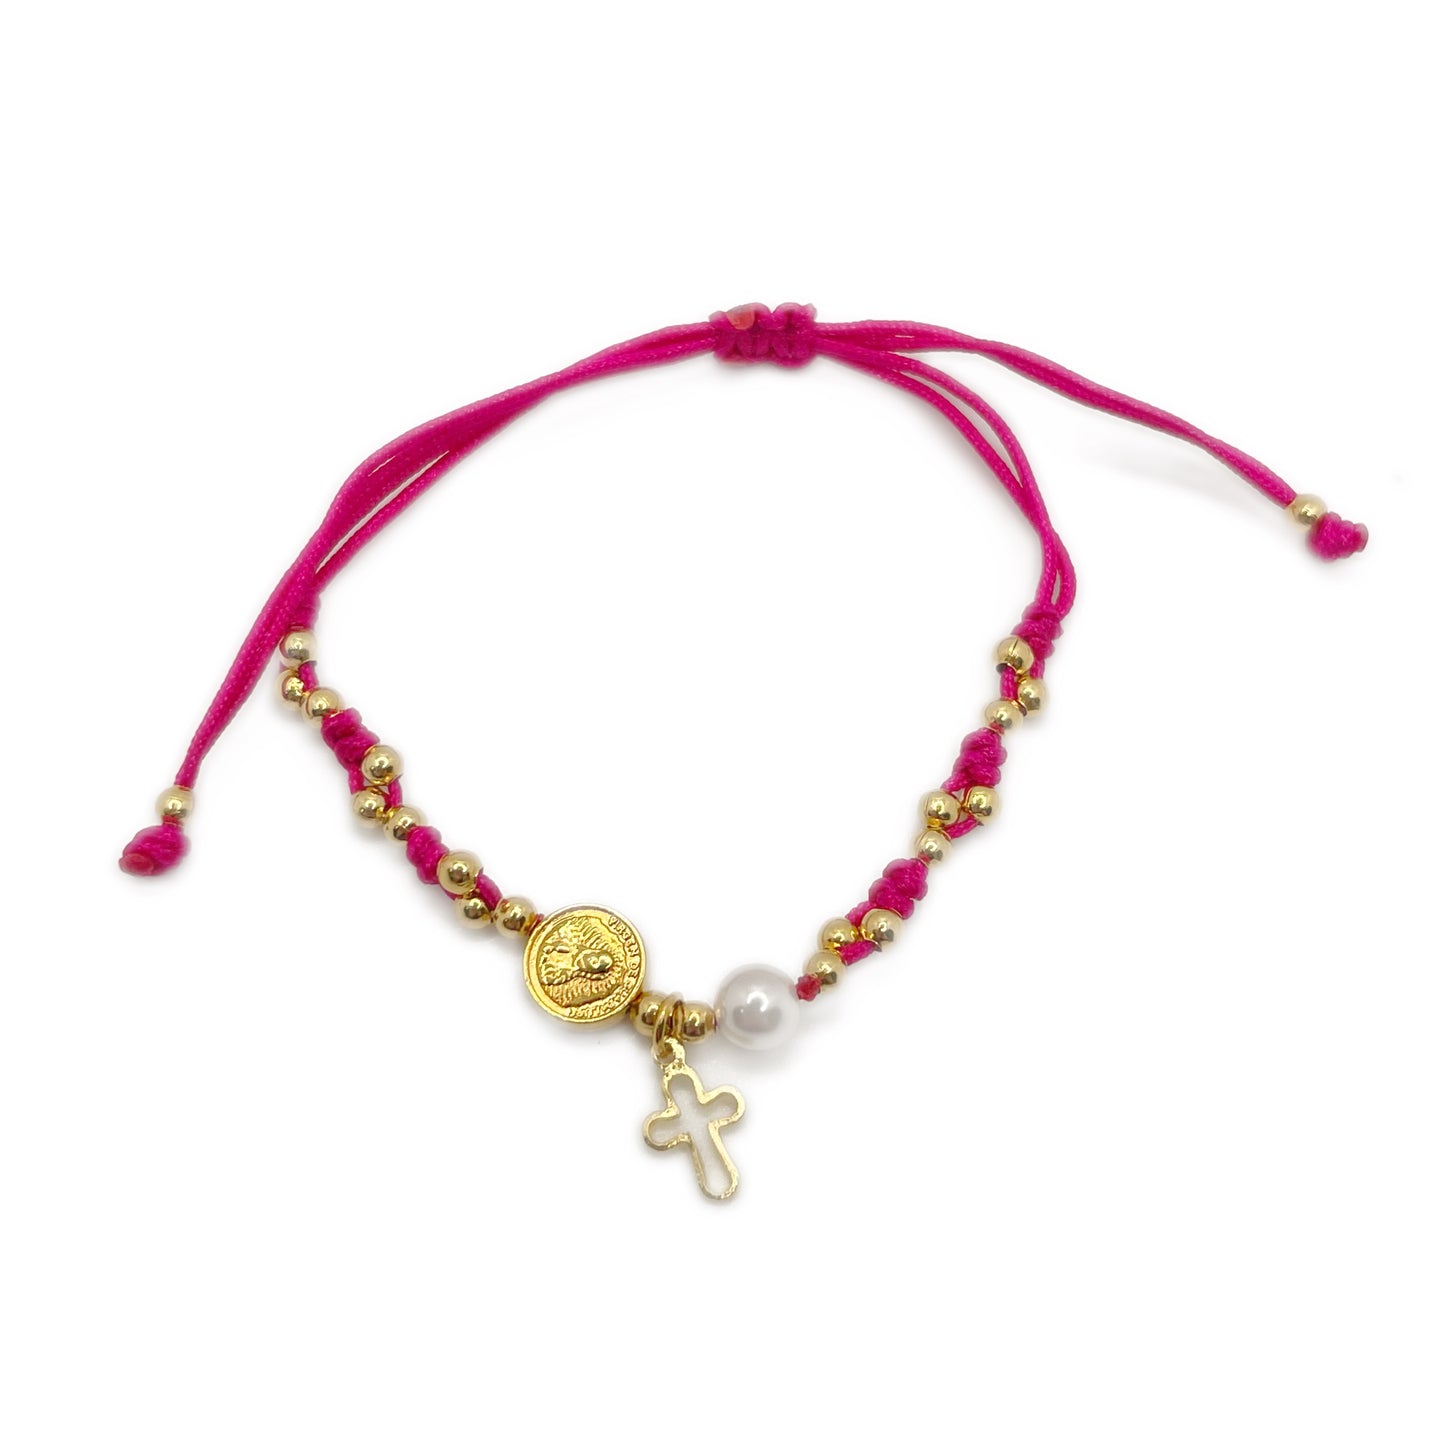 Mary & Cross bracelet